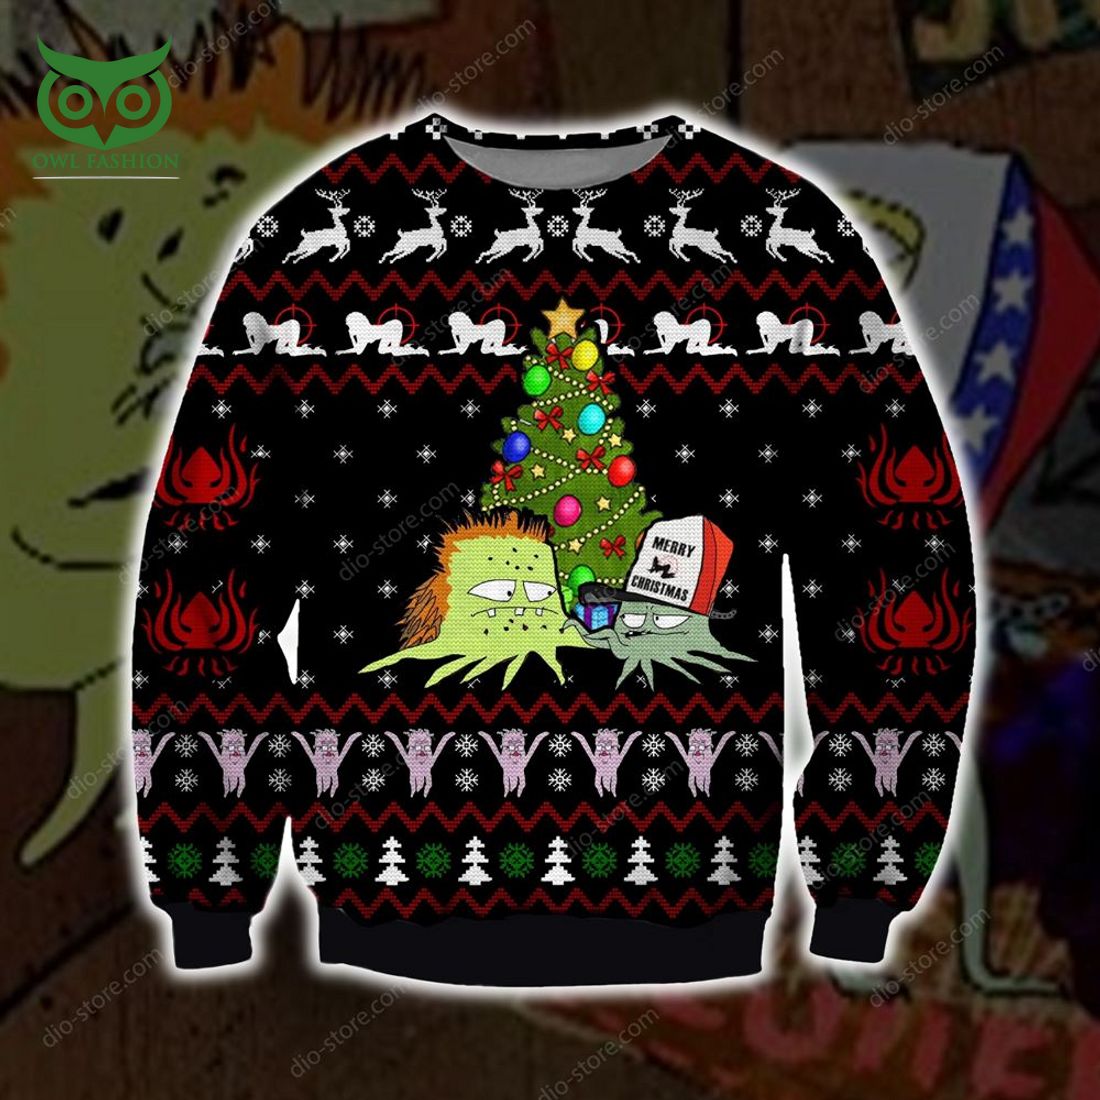 squidbillies knitting pattern 3d print ugly sweater sweatshirt christmas 1 btpQh